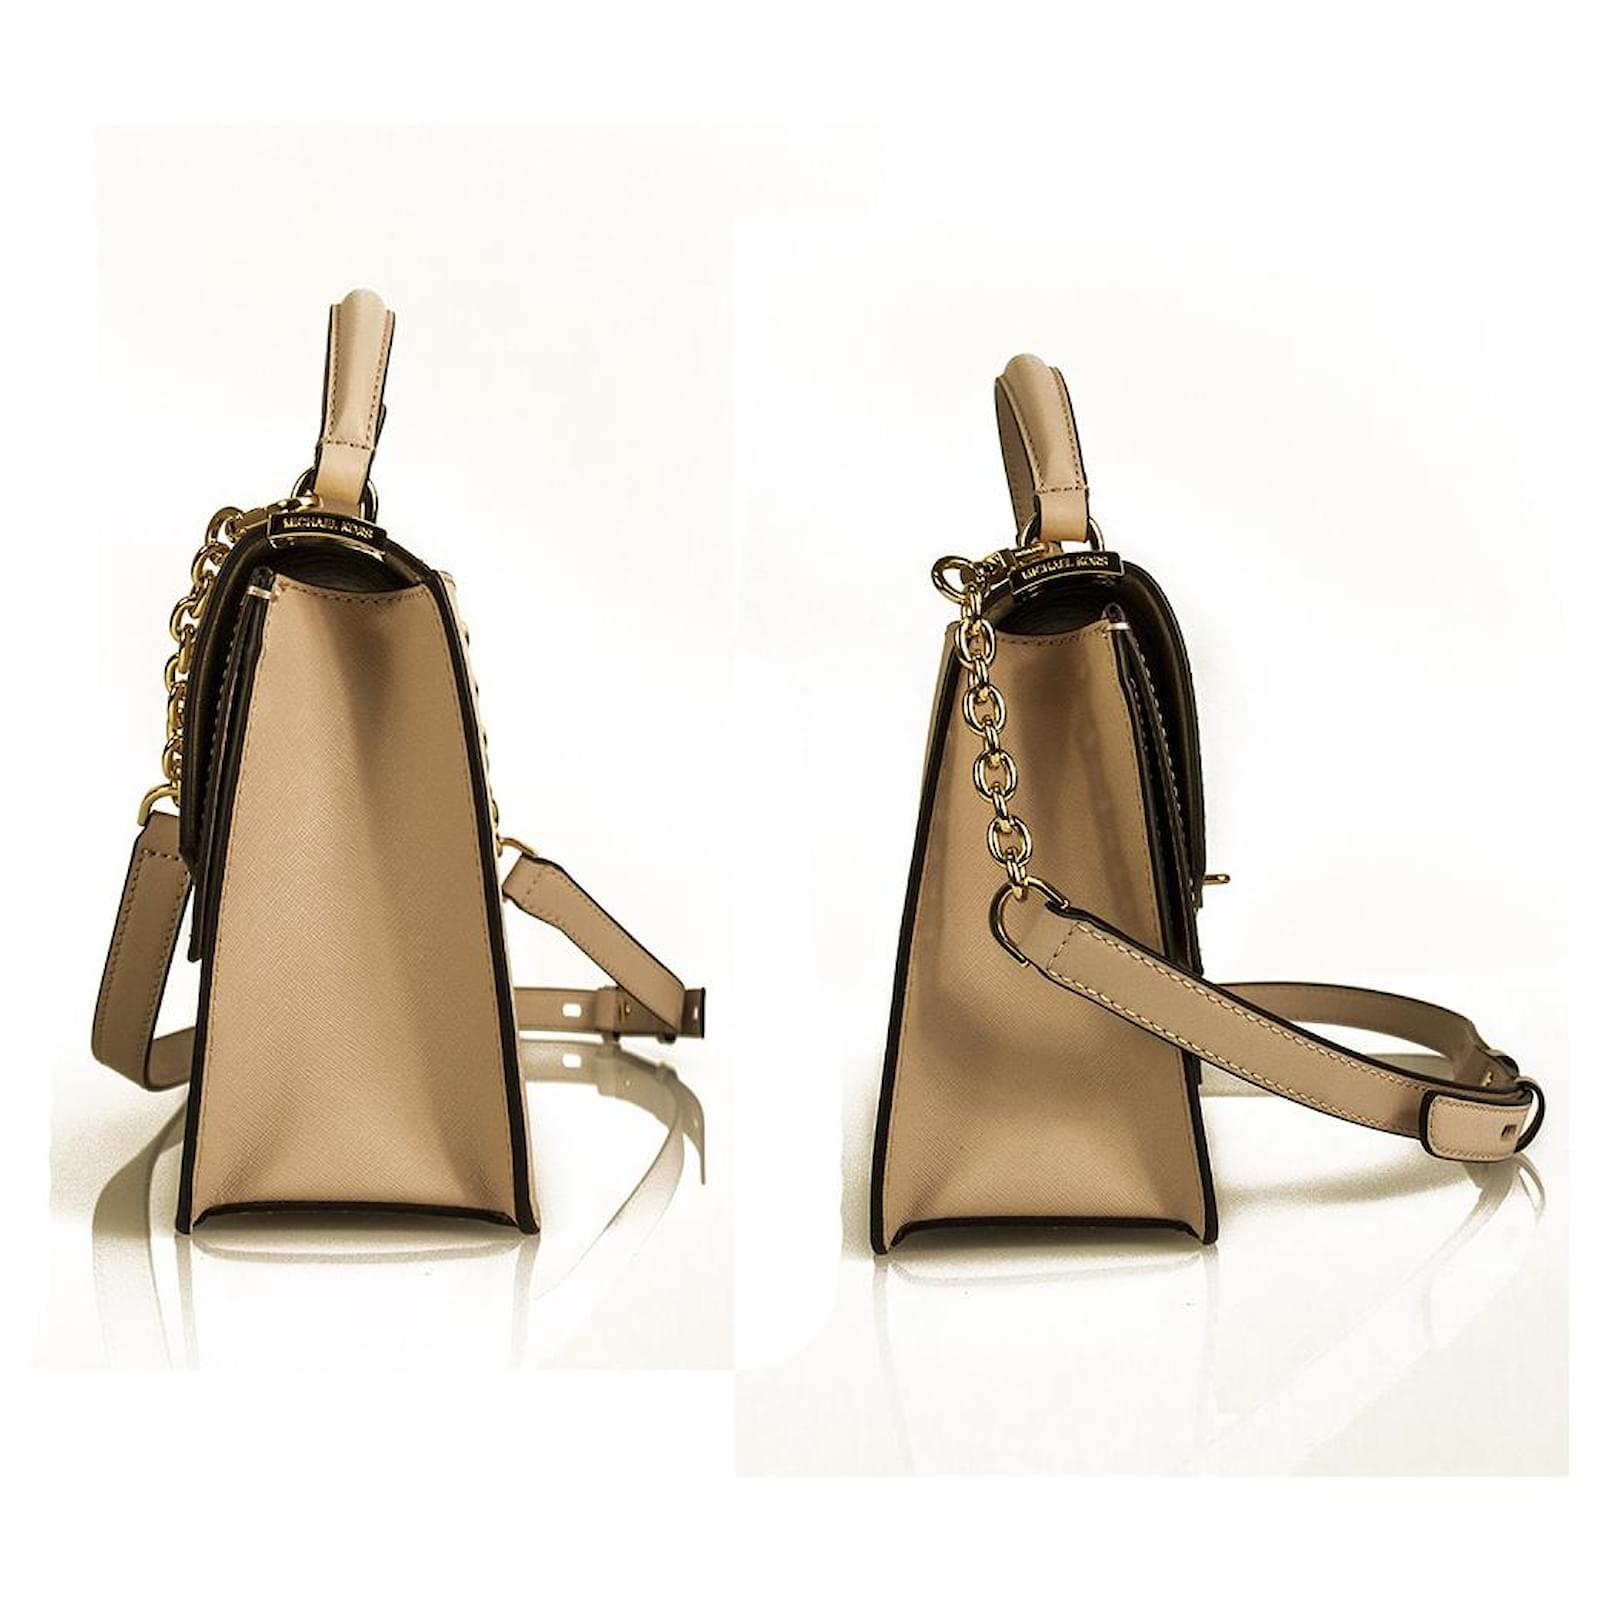 Michael Kors Greenwich Pink Leather Top Handle Crossbody Handbag